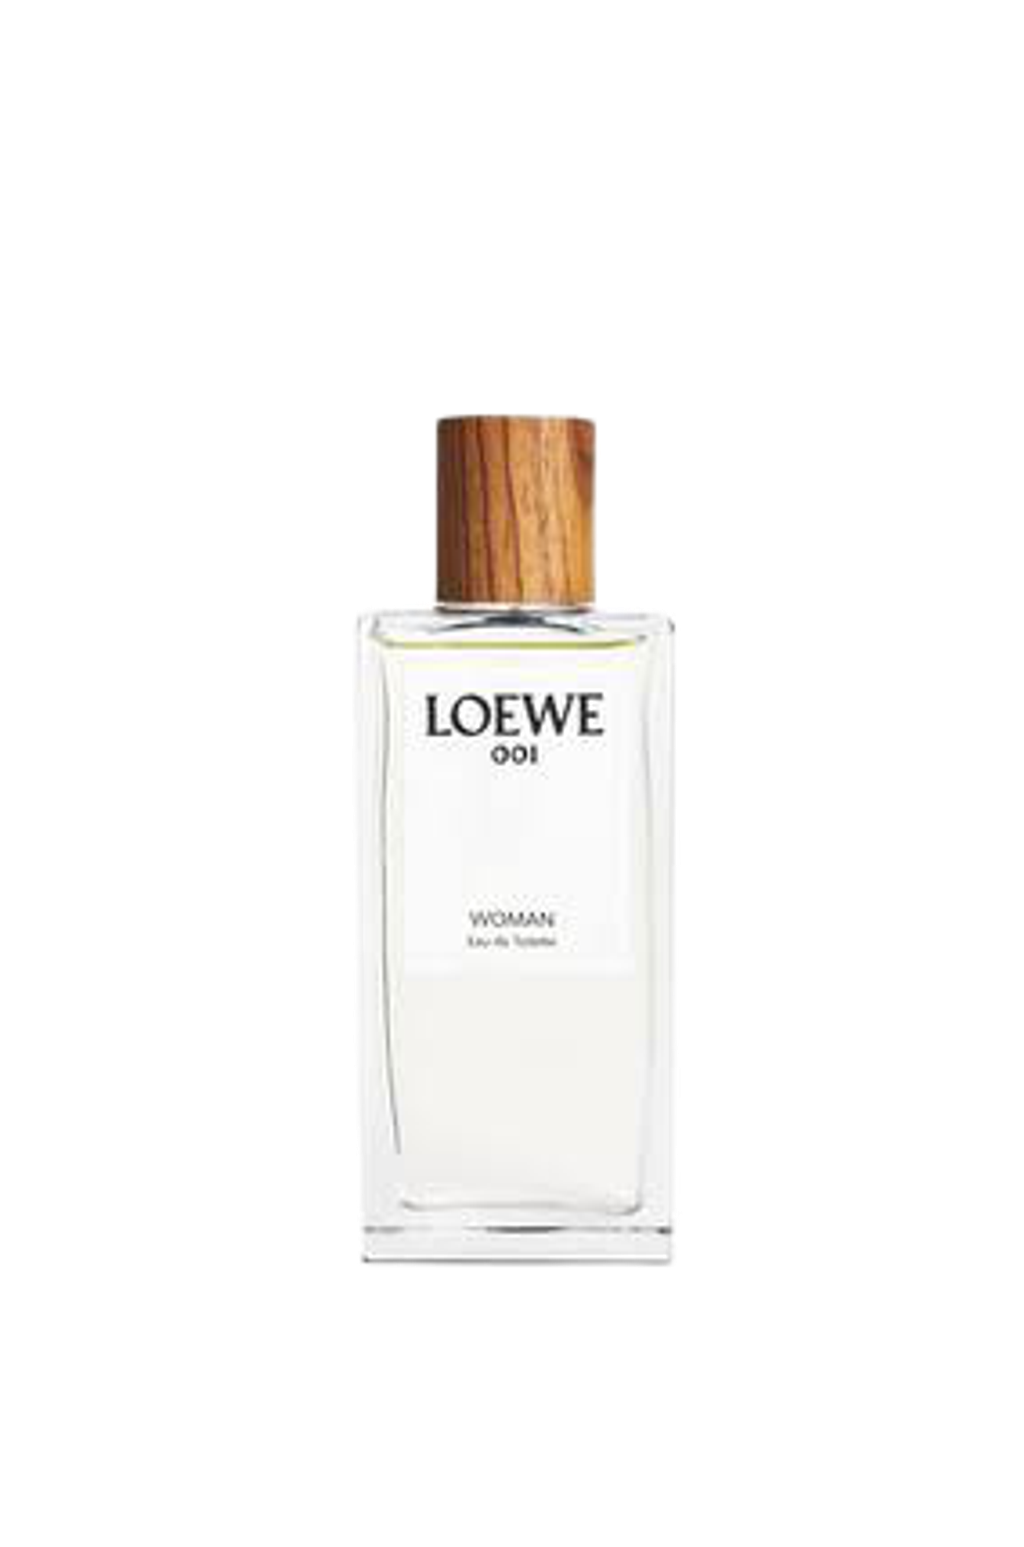 LOEWE 001 WOMAN EDP 100ML [Authentic] – LuxuryfragranceStore.com